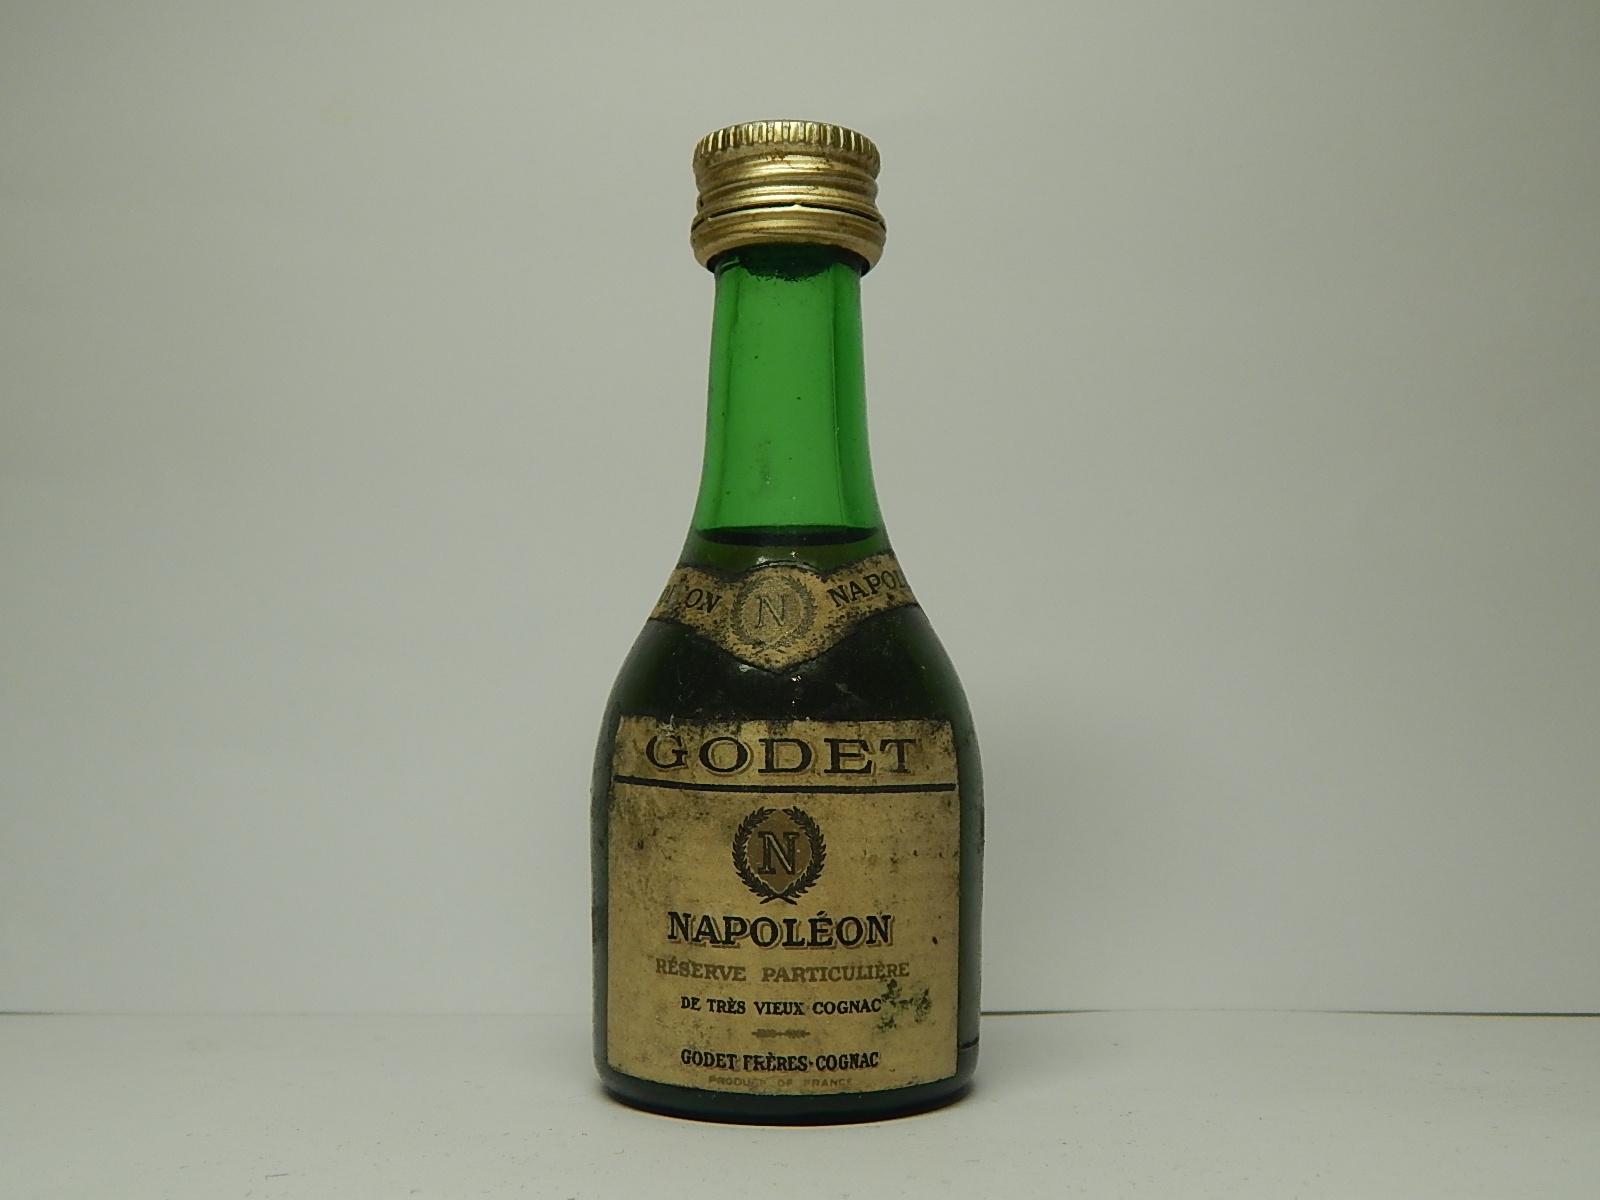 NAPOLEON Cognac